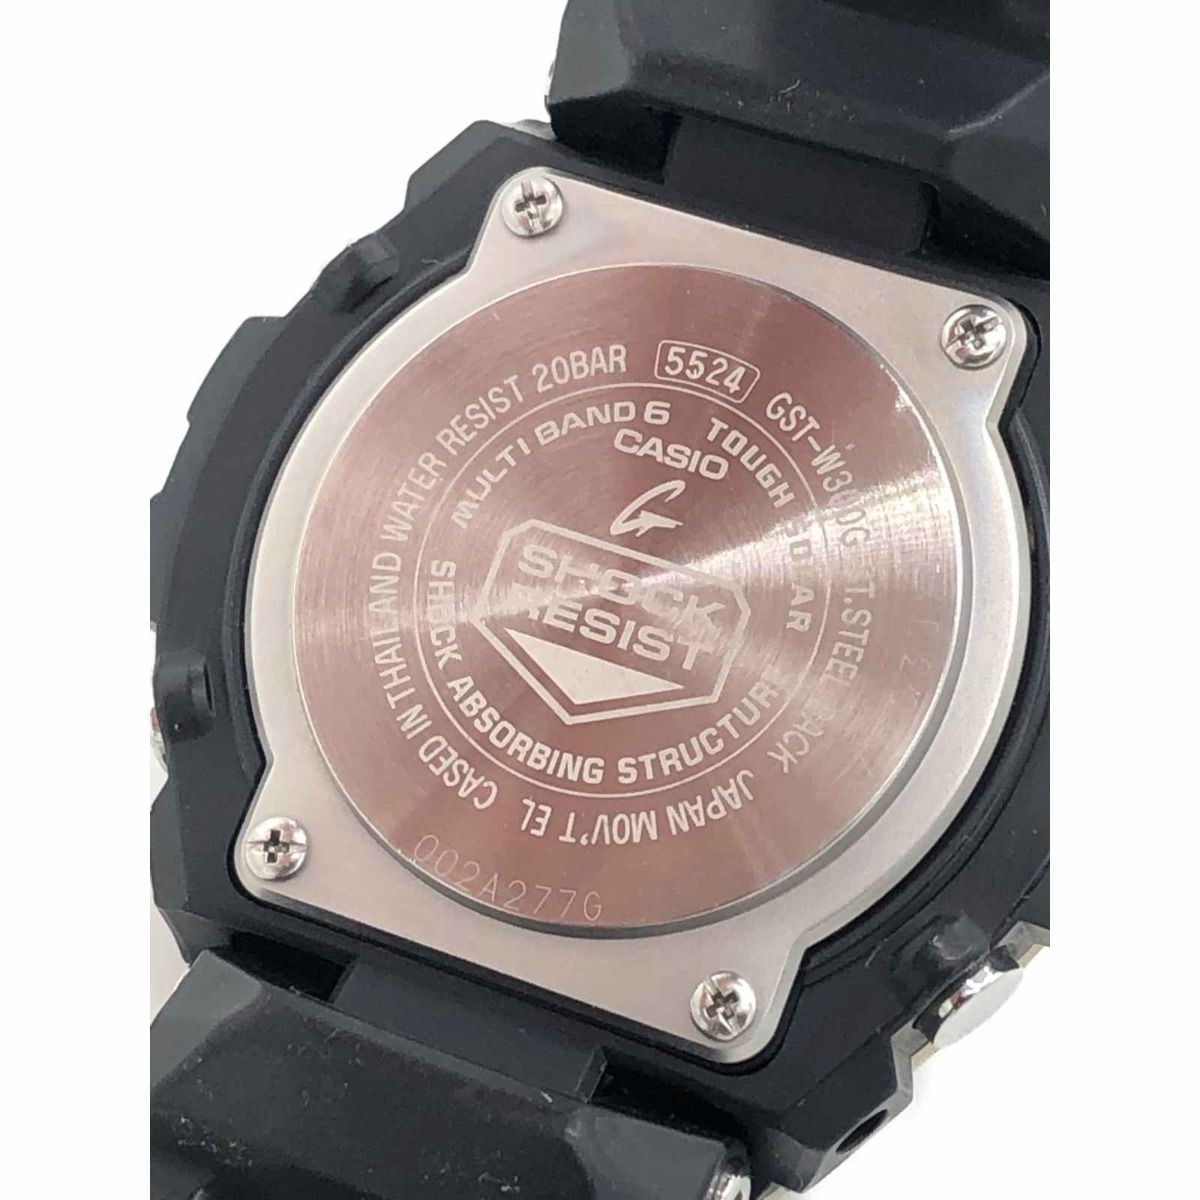 〇〇CASIO カシオ 腕時計 メンズ G-SHOCK 5524 ブラック x ゴールド - メルカリ